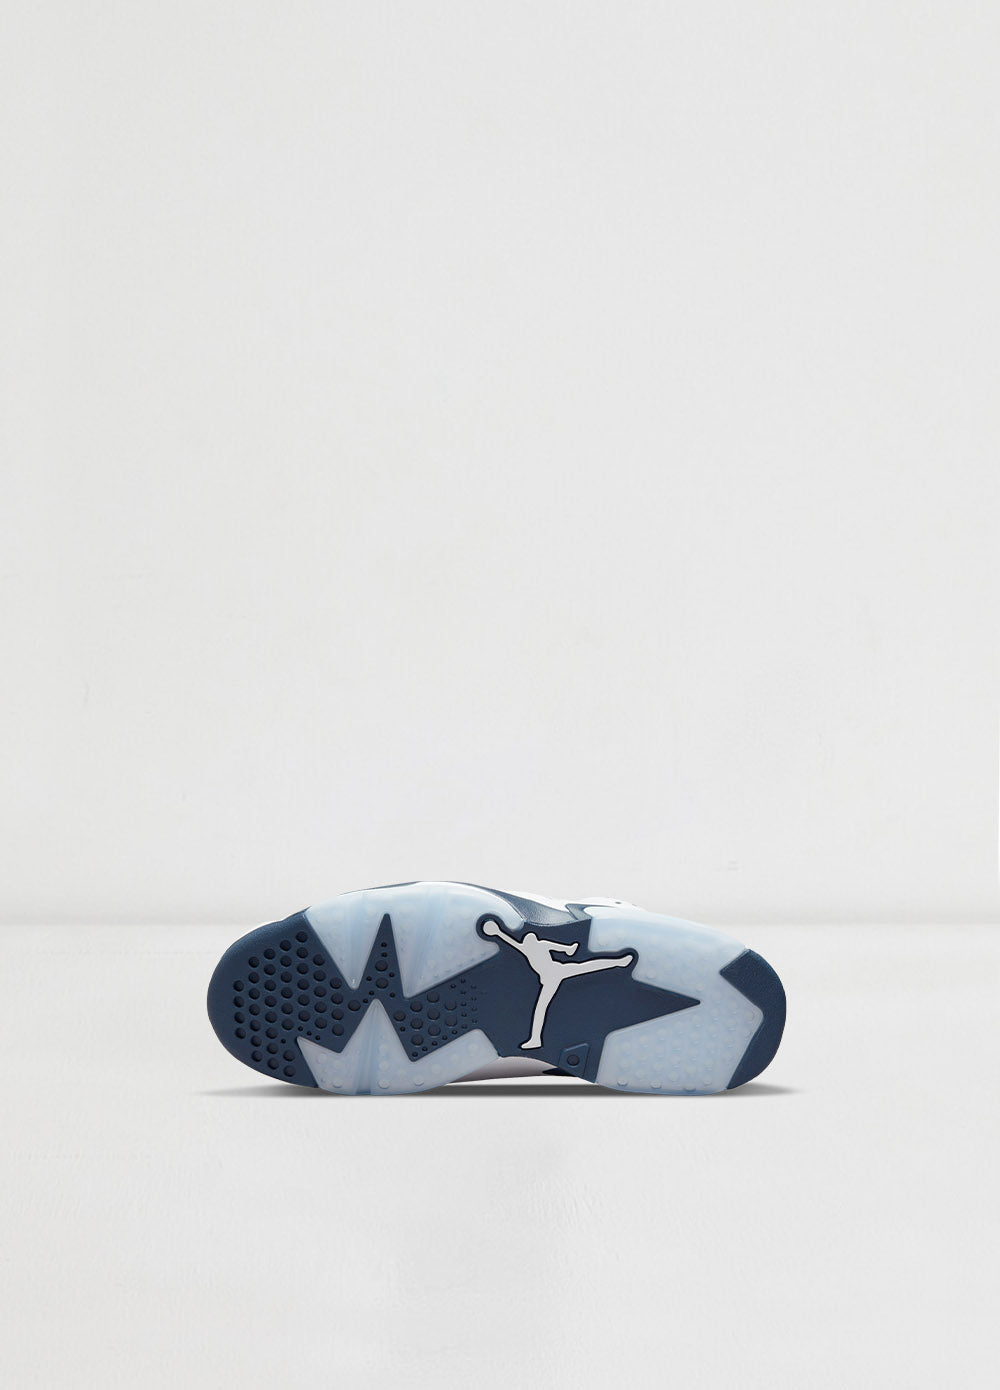 Air Jordan 6 Retro 'Midnight Navy' Sneakers